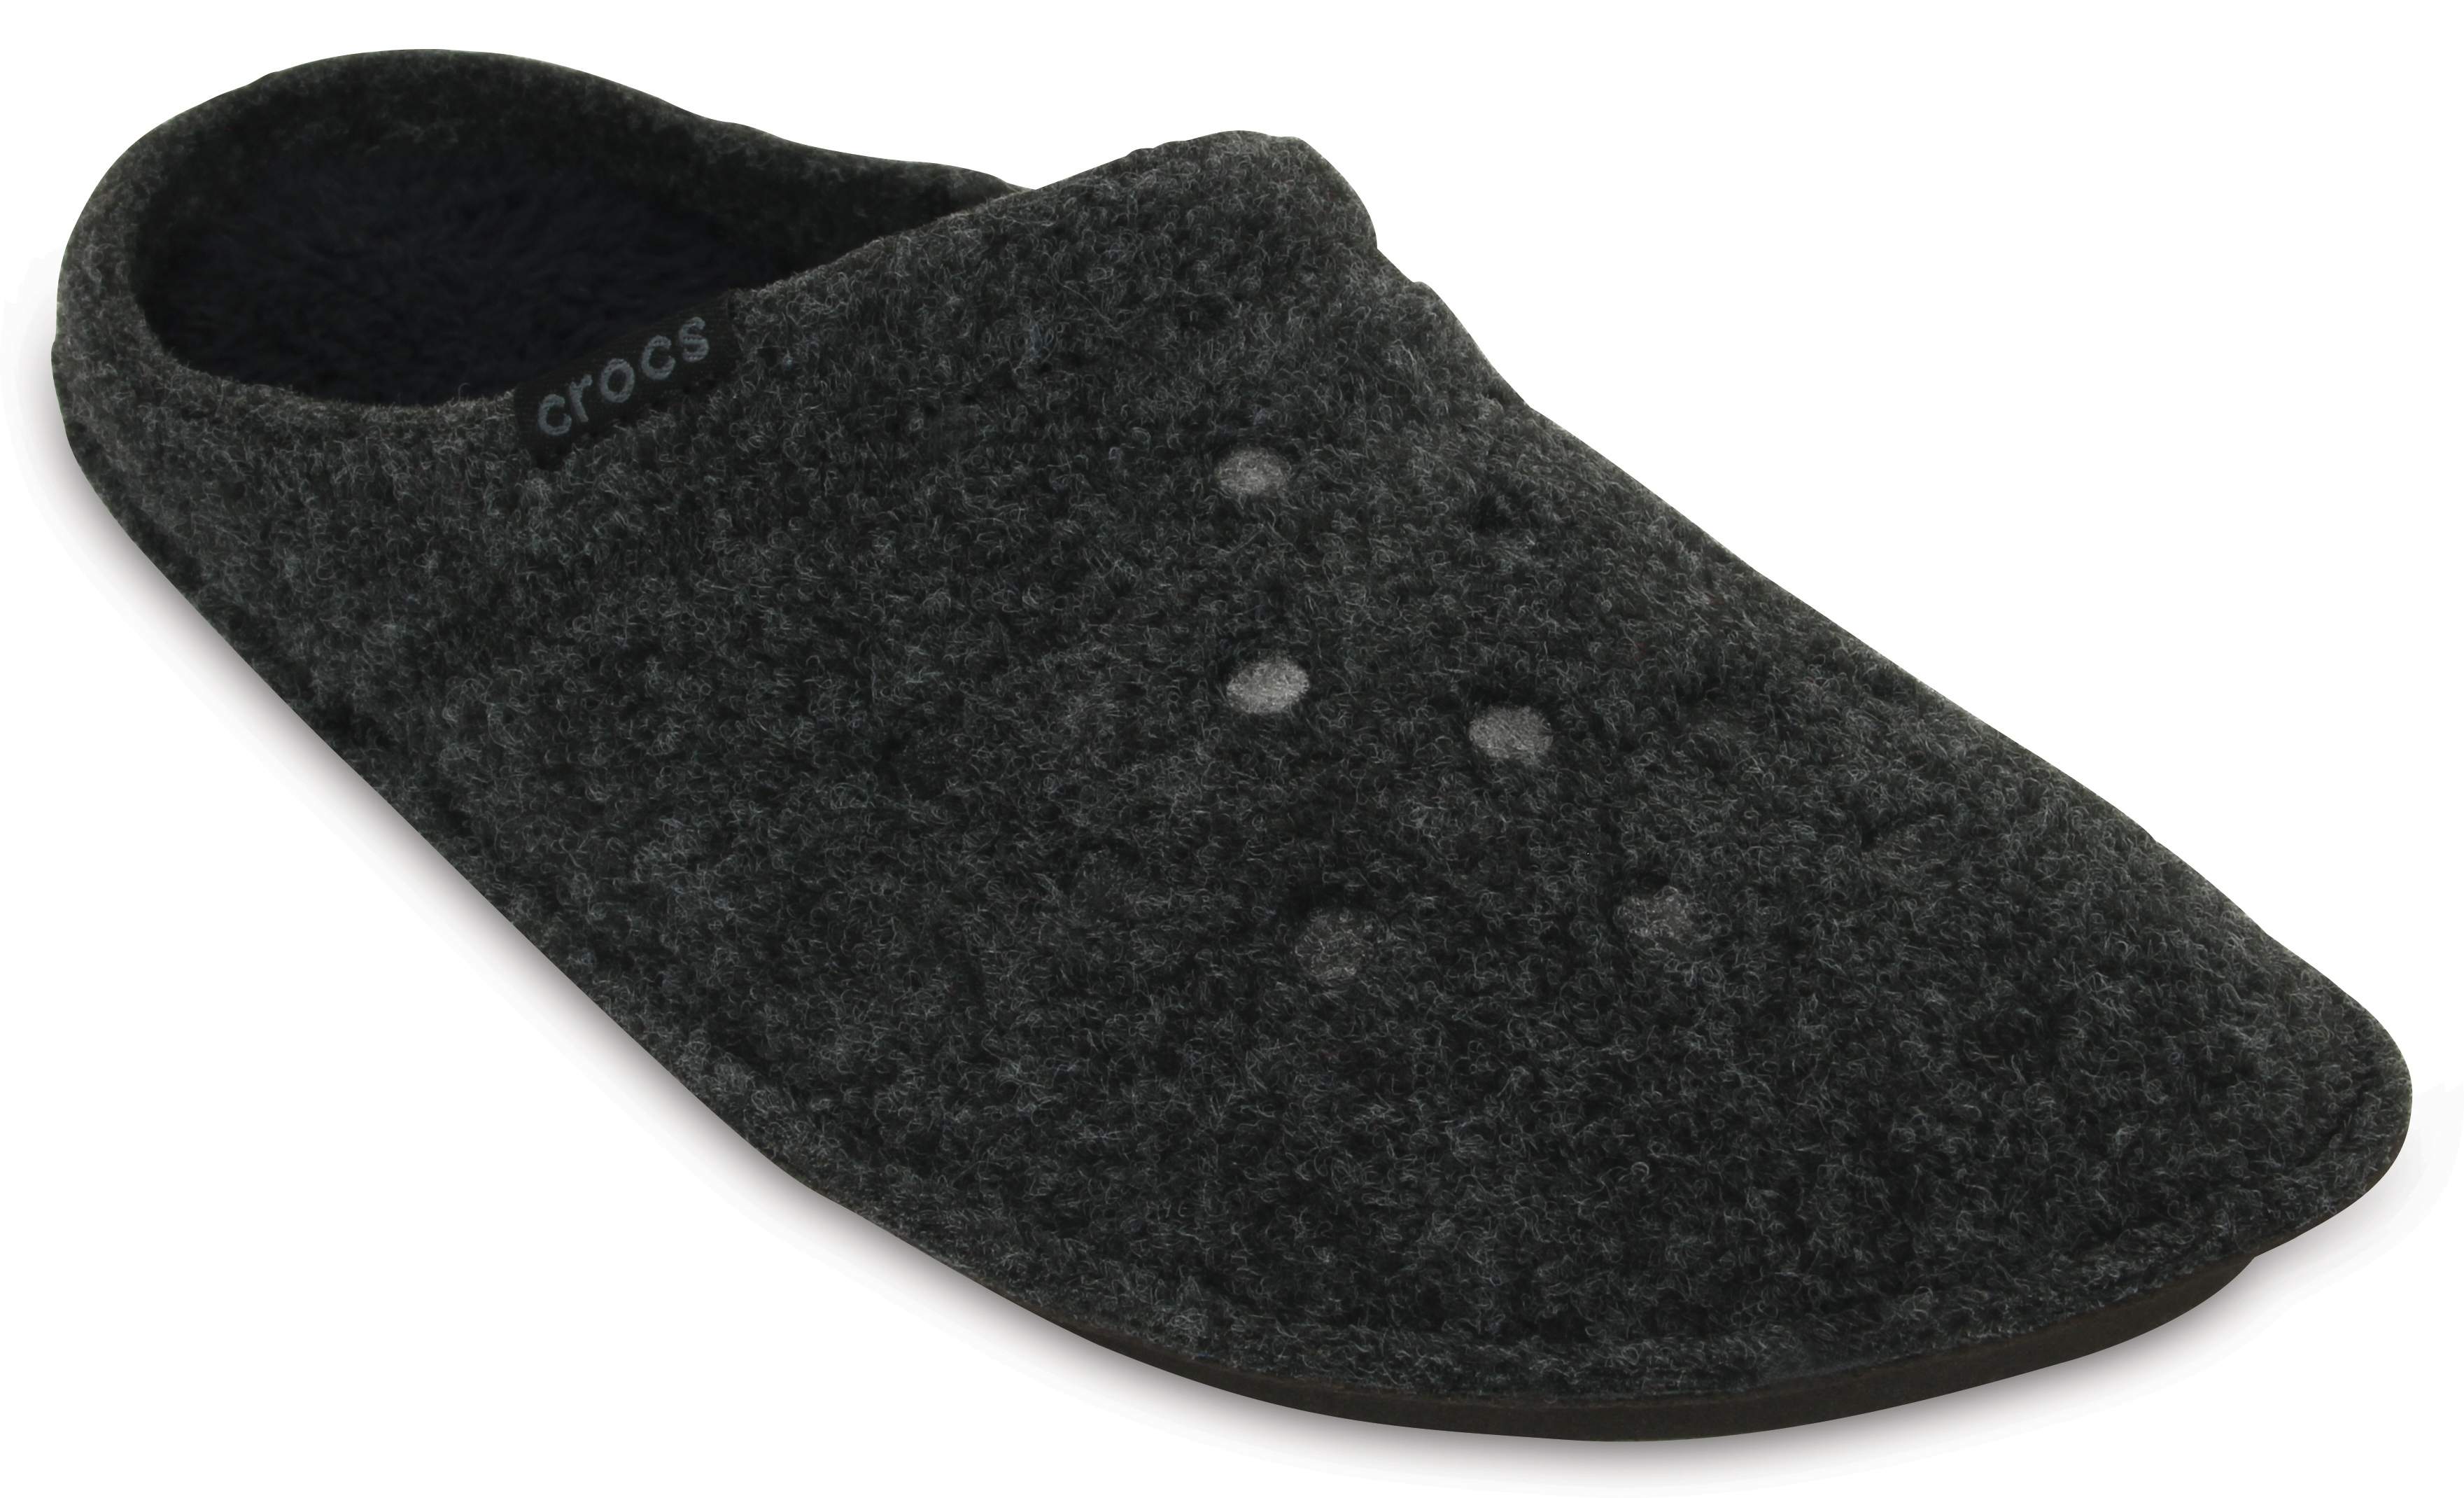 crocs fur lined slippers